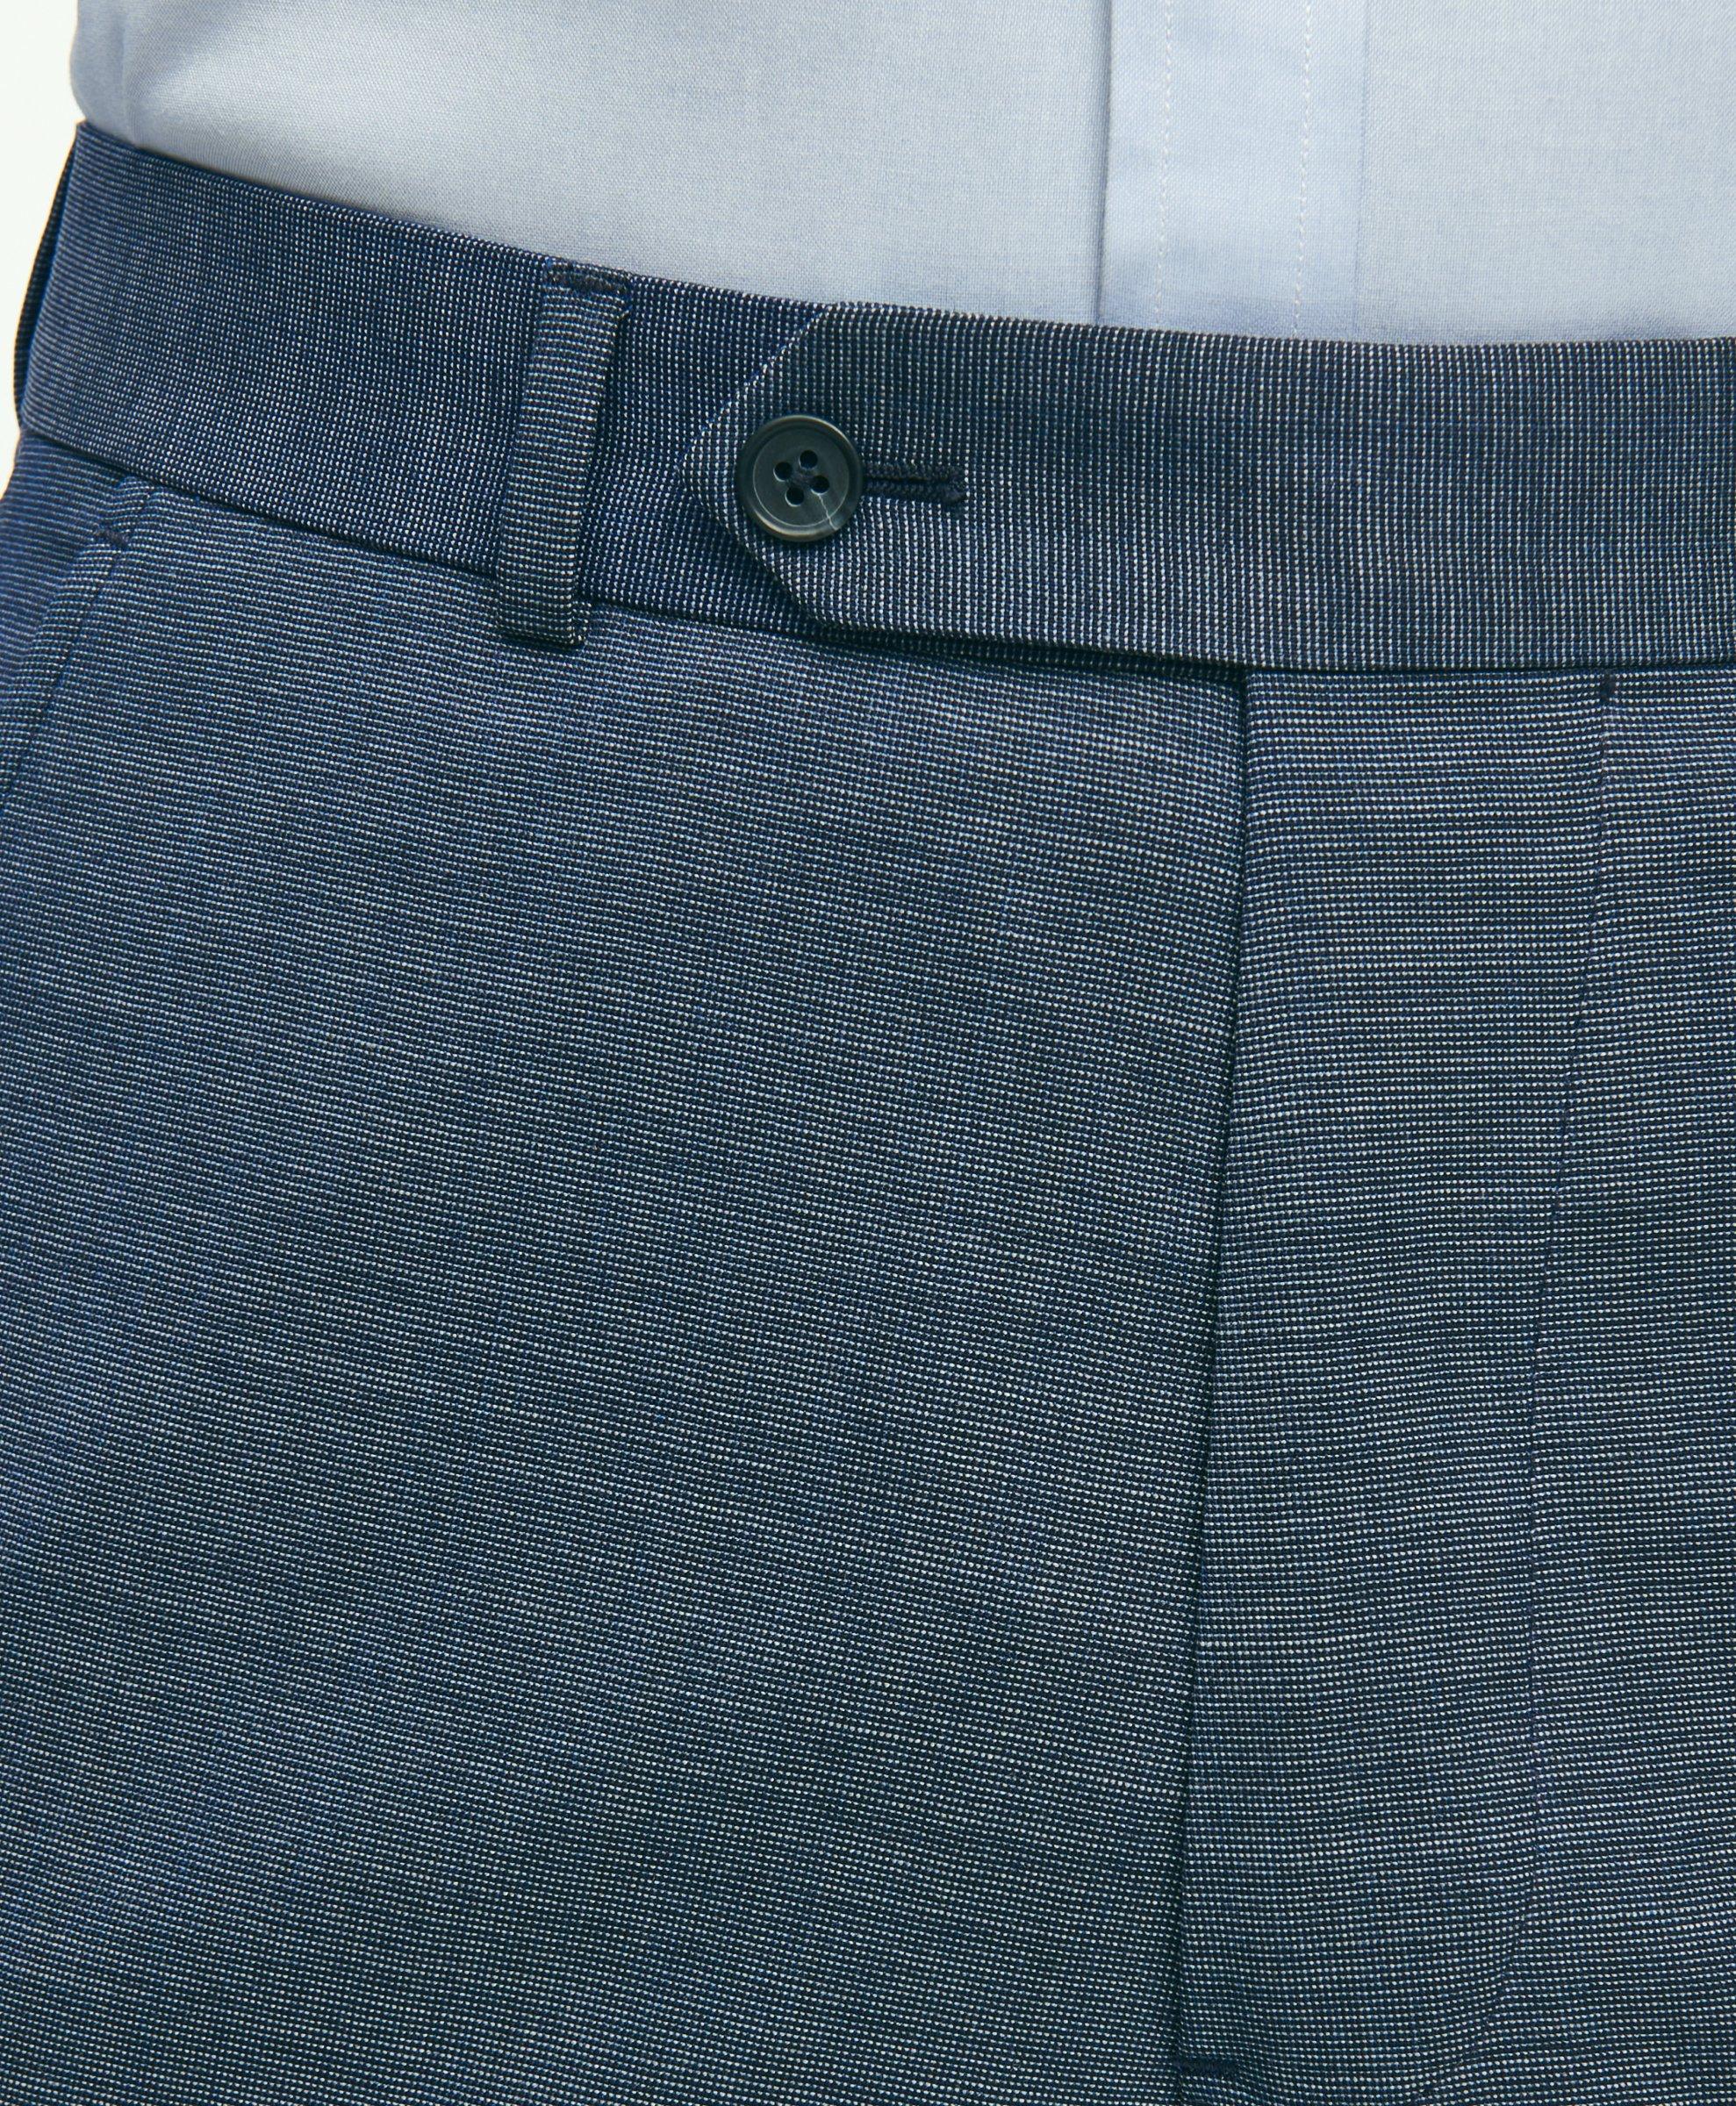 Brooks Brothers Explorer Collection Regent Fit Merino Wool Suit Pants